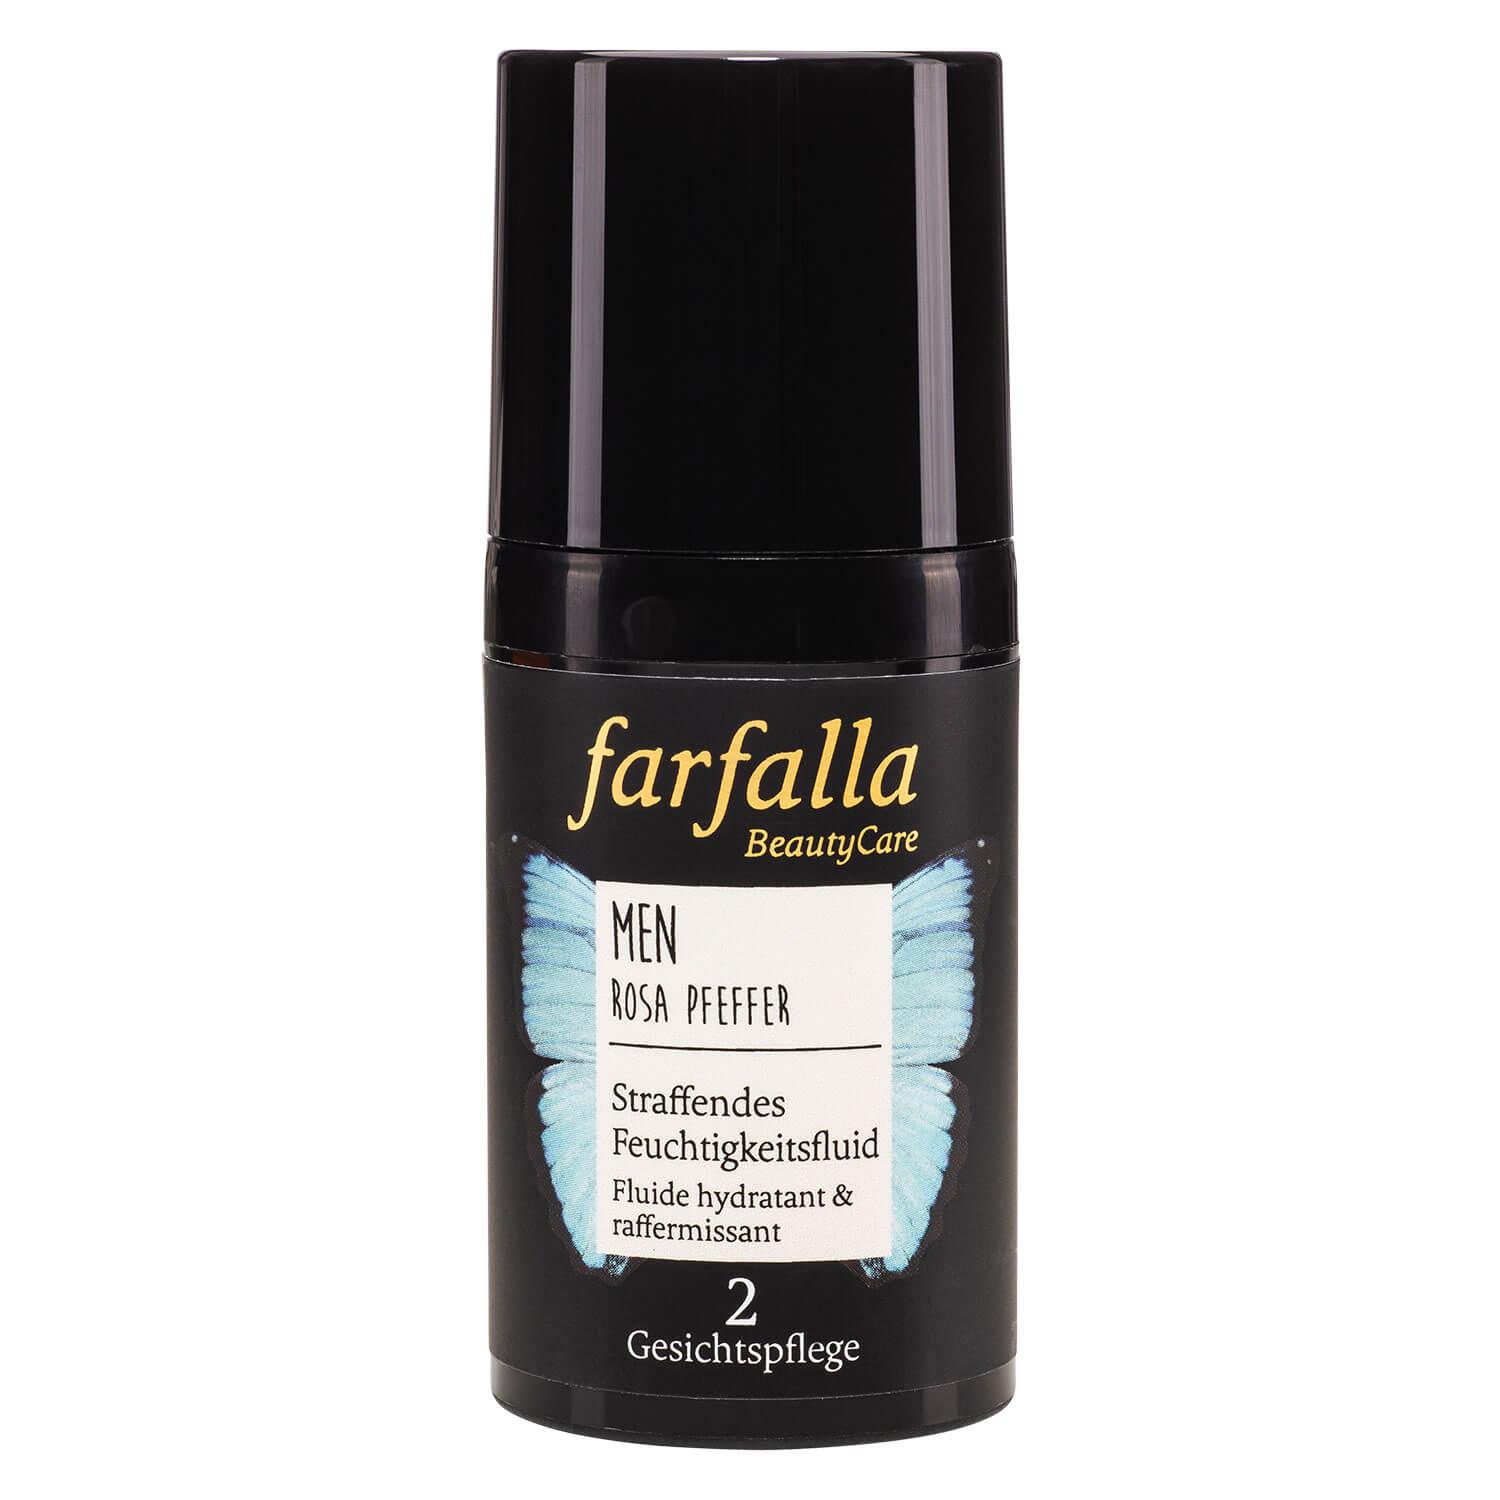 Farfalla Men - Rosa Pfeffer Moisturizing & firming fluid